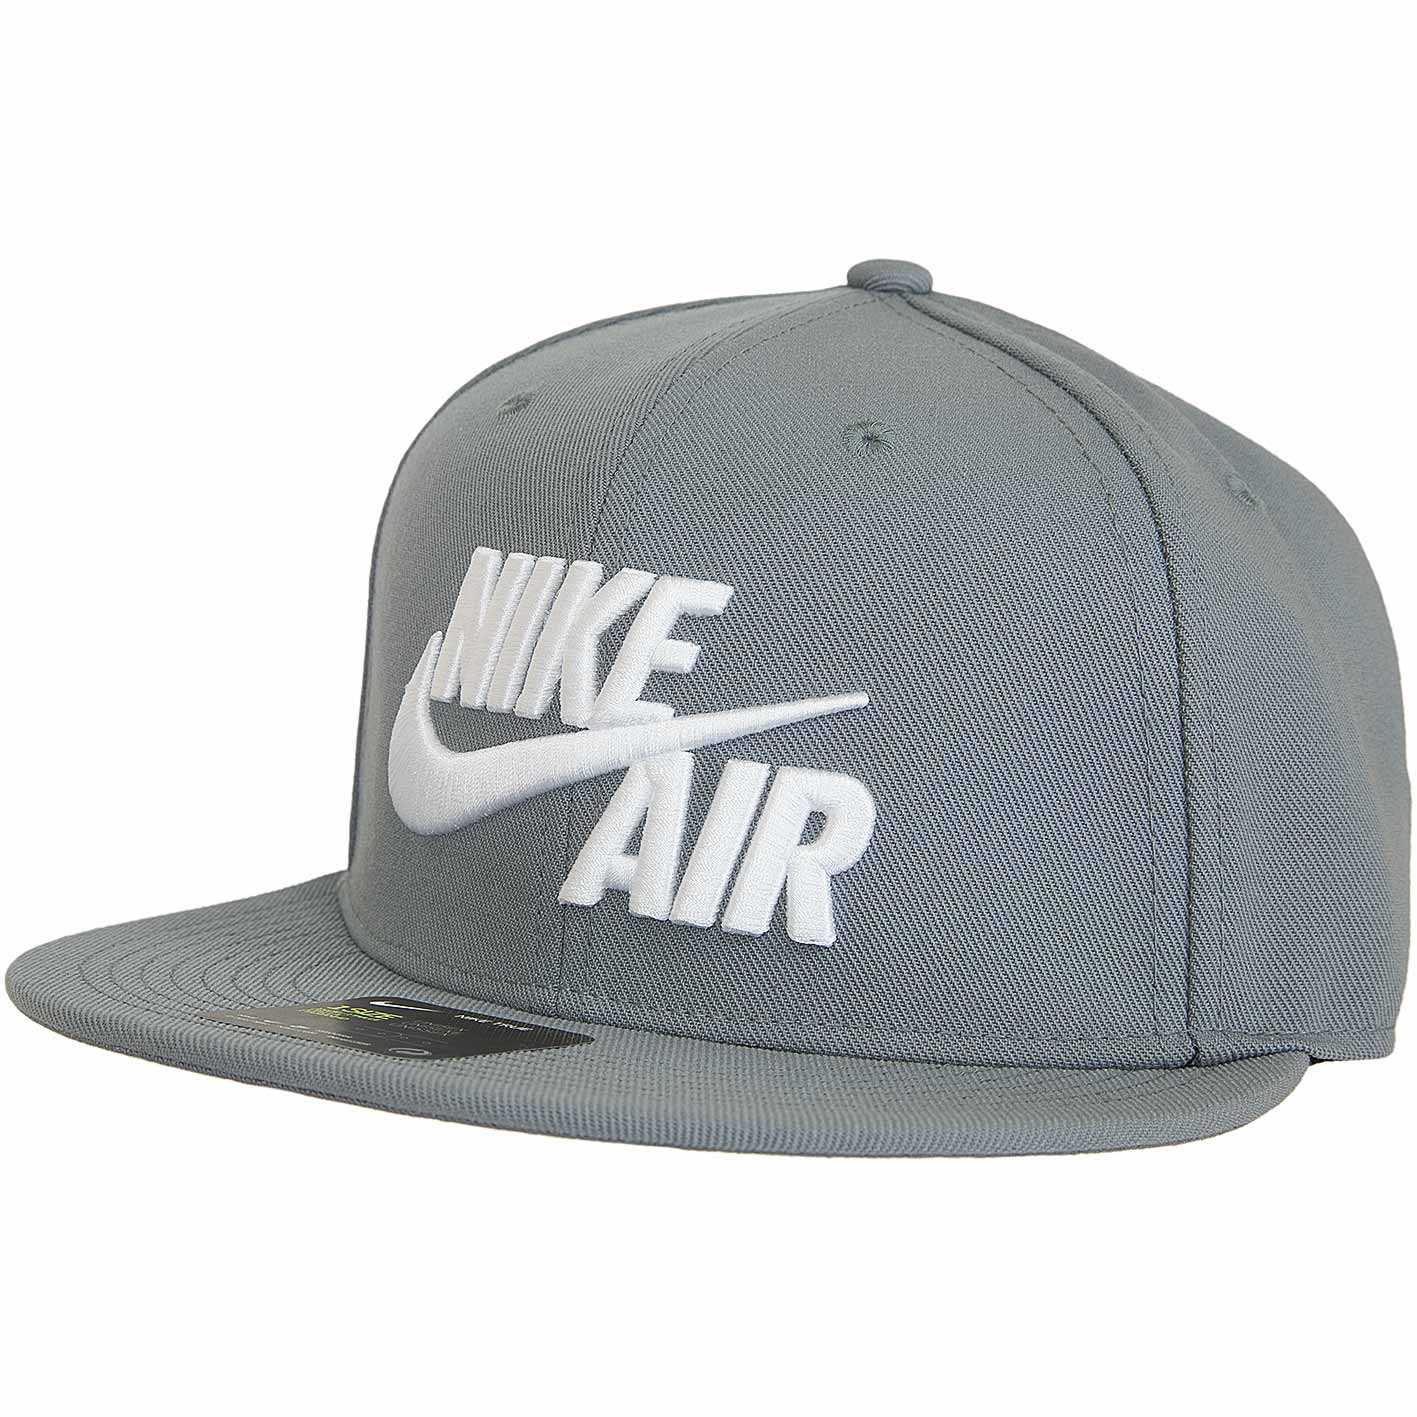 Compadecerse Bailarín Tradicion ☆ Nike Snapback Cap Air True Classic grau/weiß - hier bestellen!